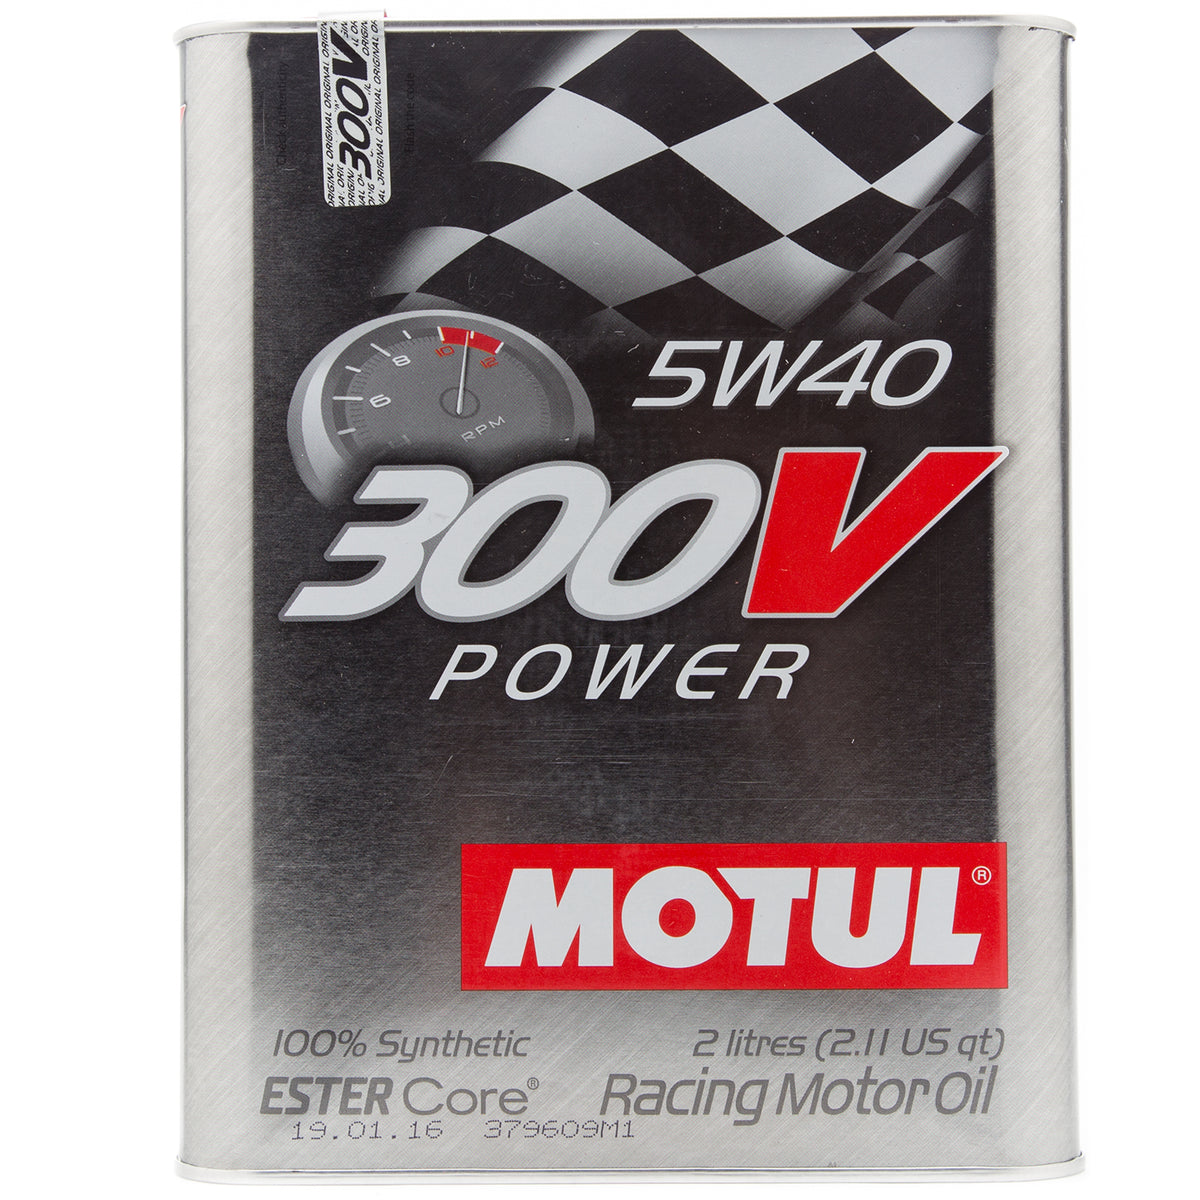 Motul Power 5w40 5L